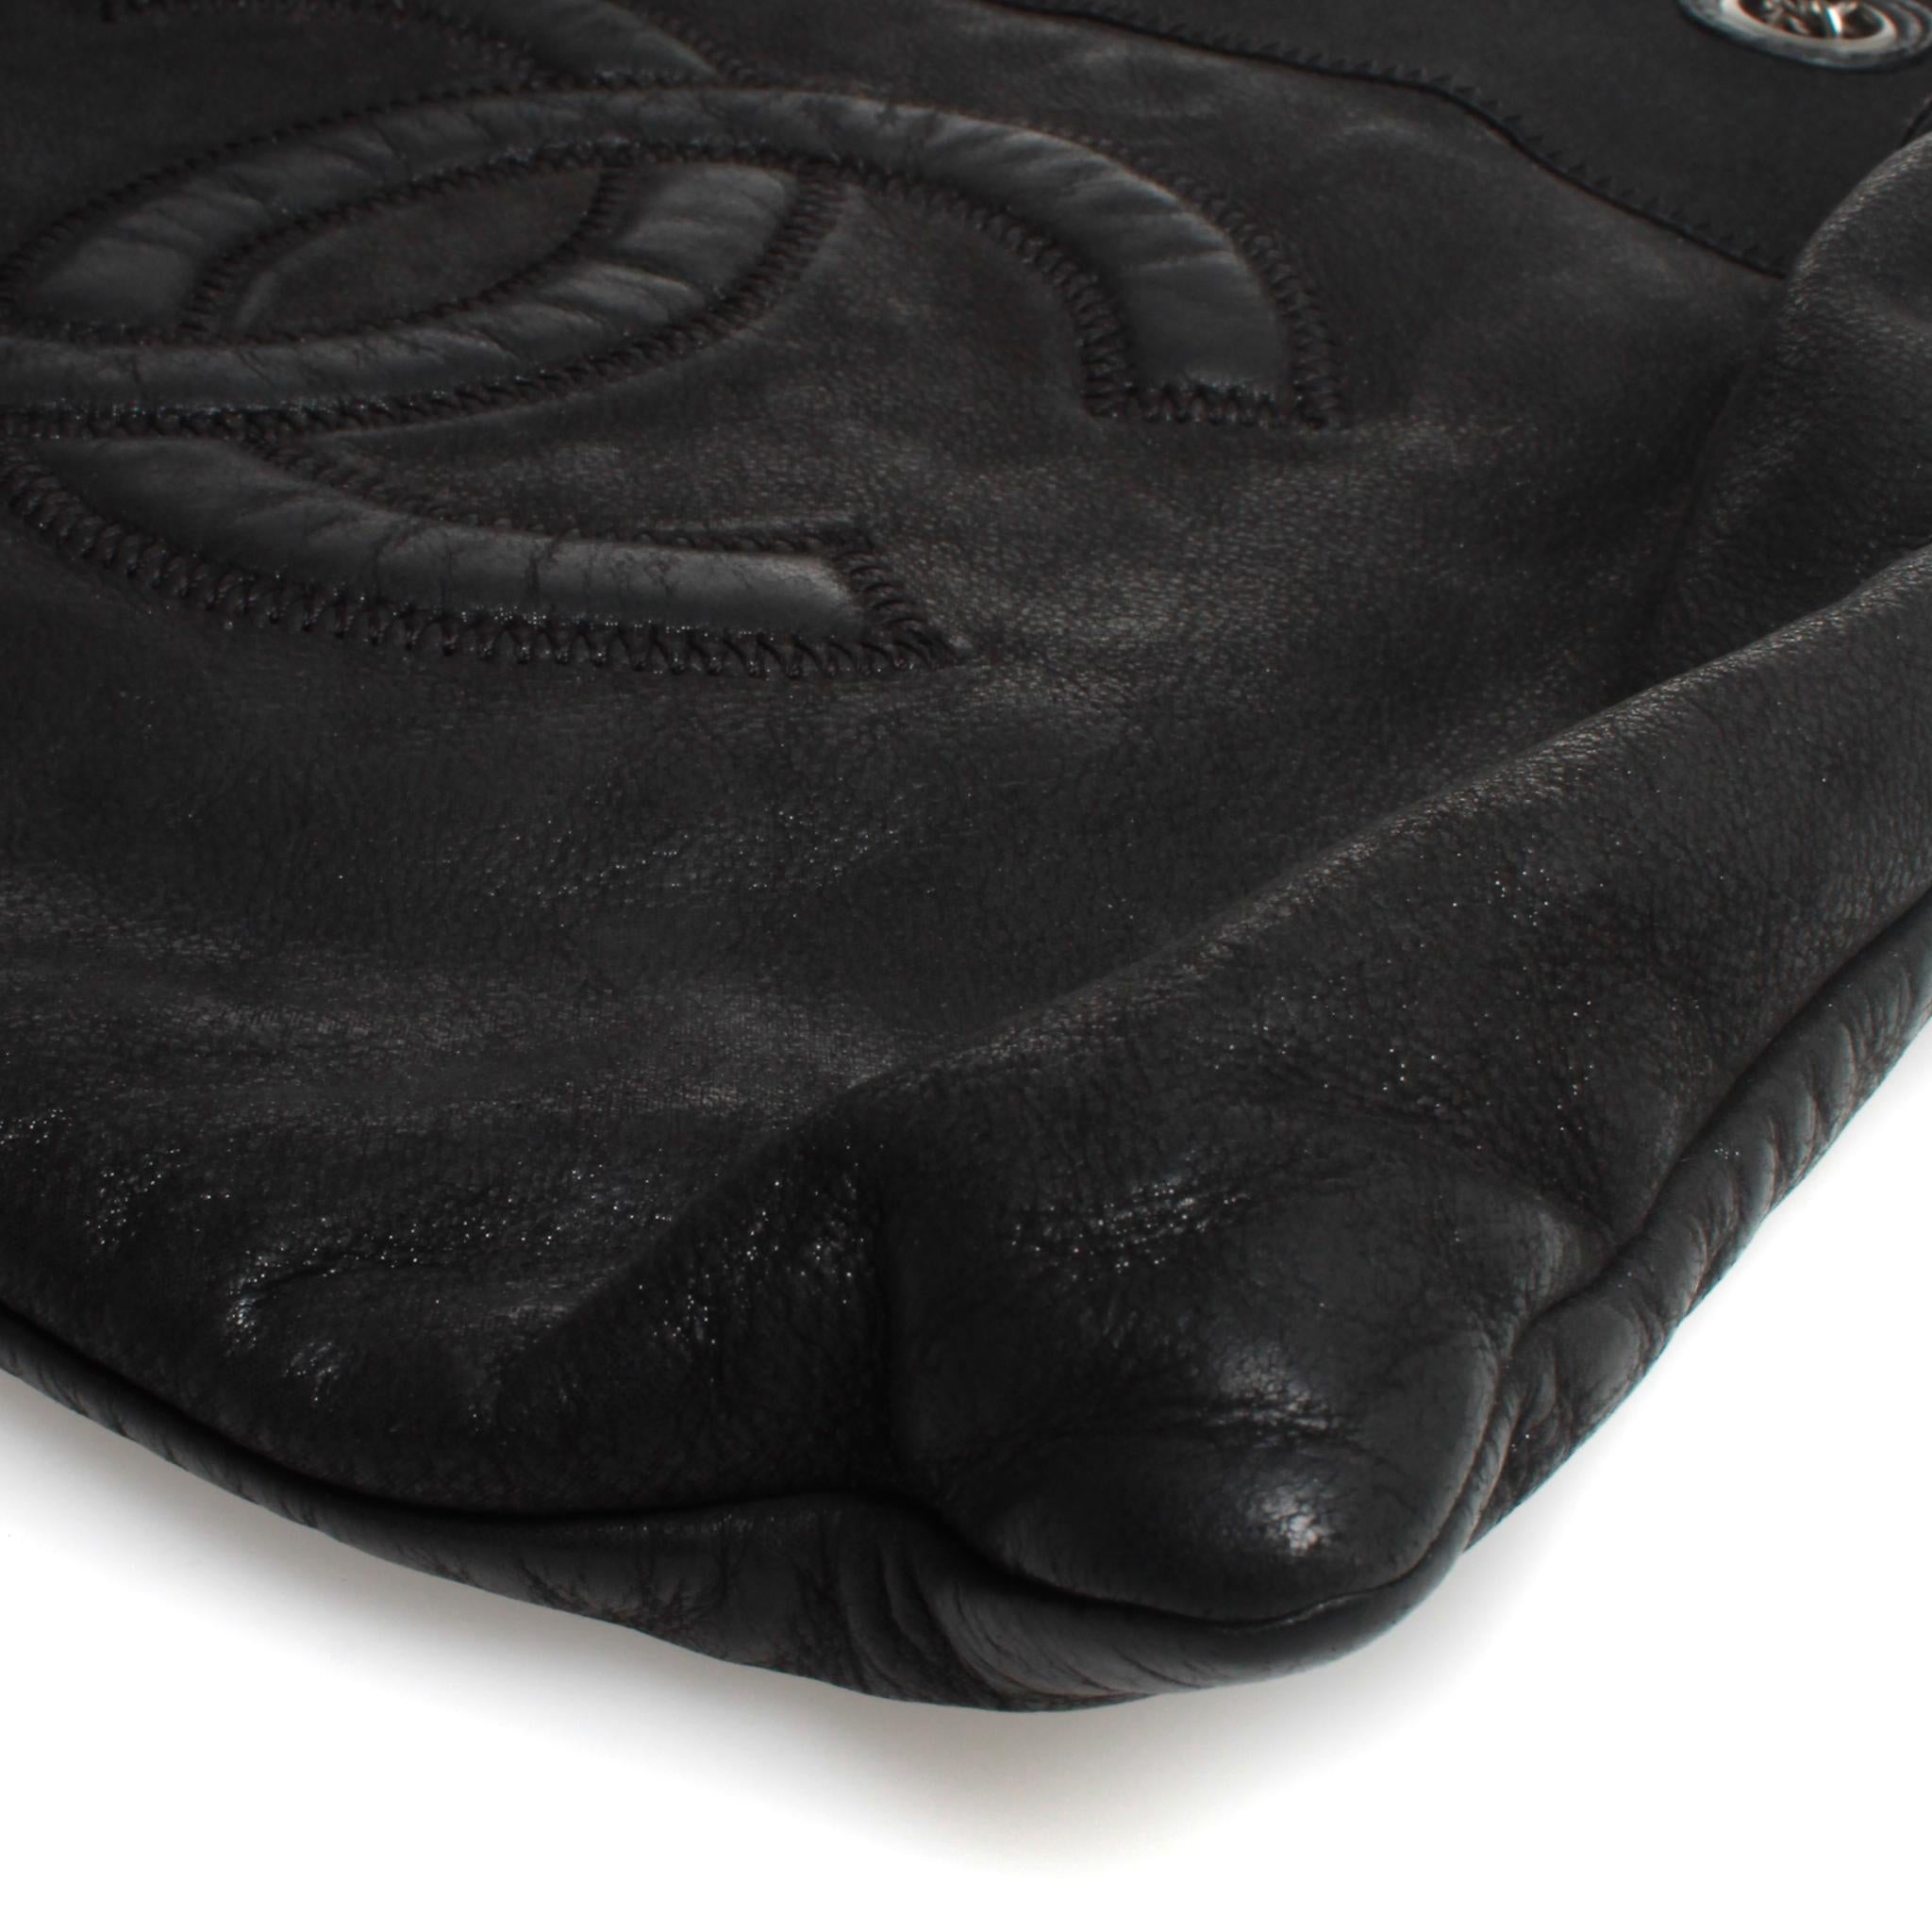 Black Chanel black handbag